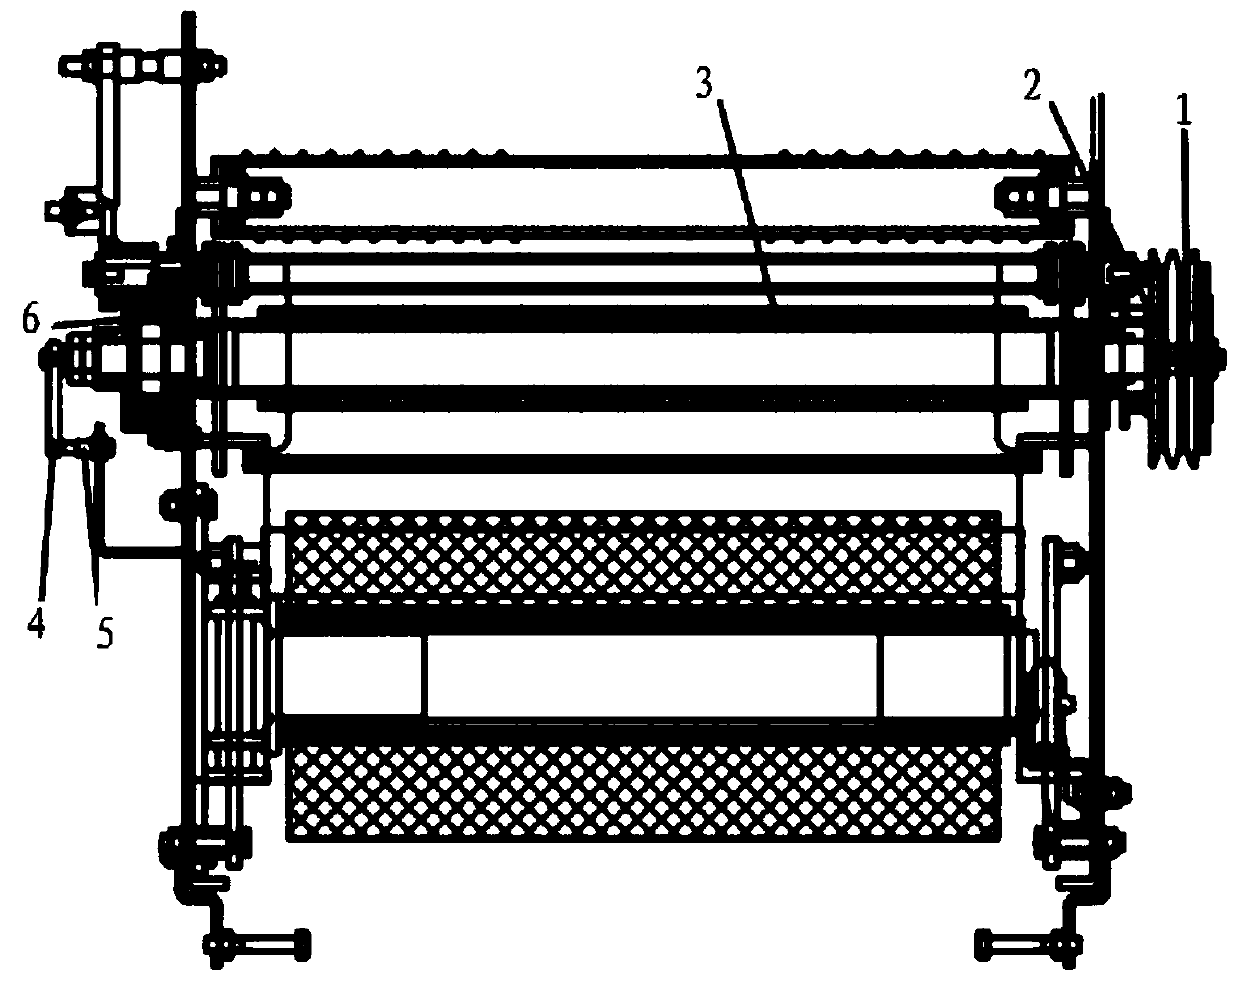 Automatic net winding mechanism